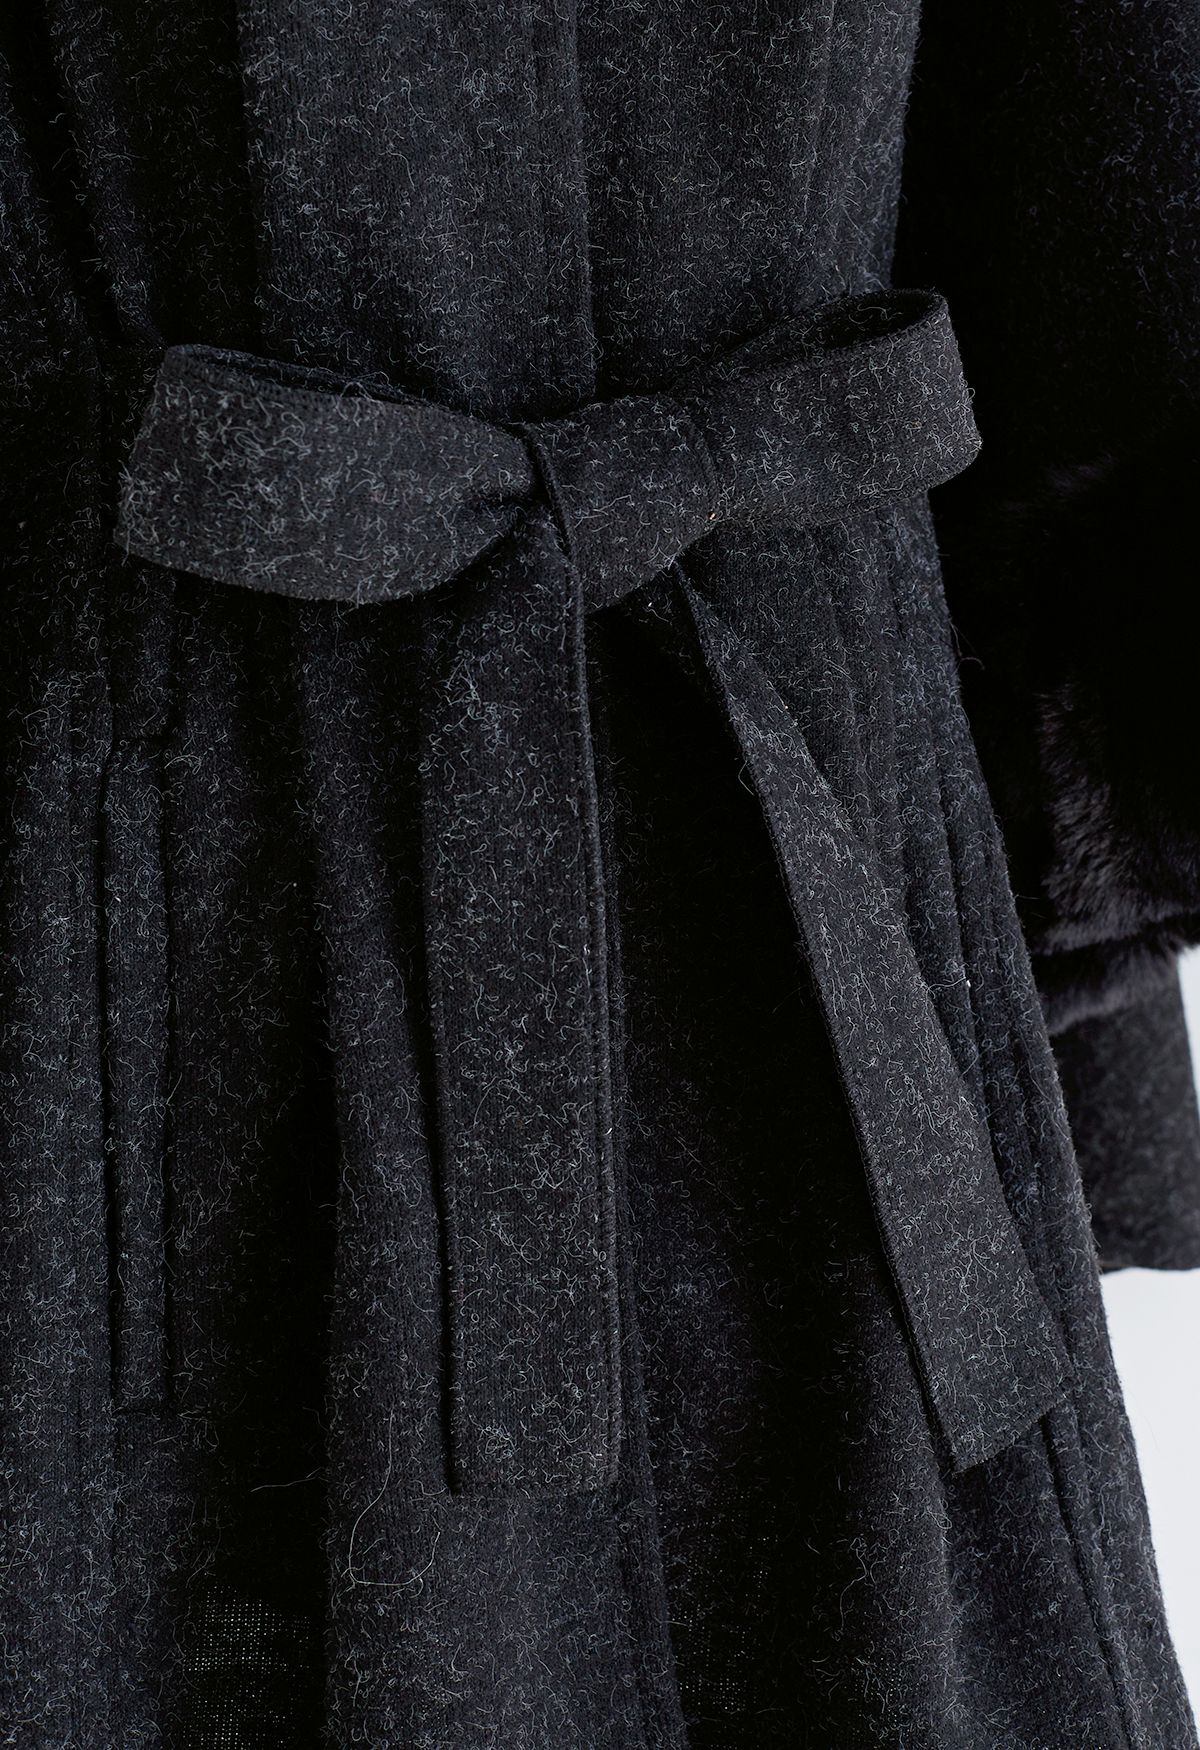 Self-Tie Bowknot Faux Fur Poncho in Black